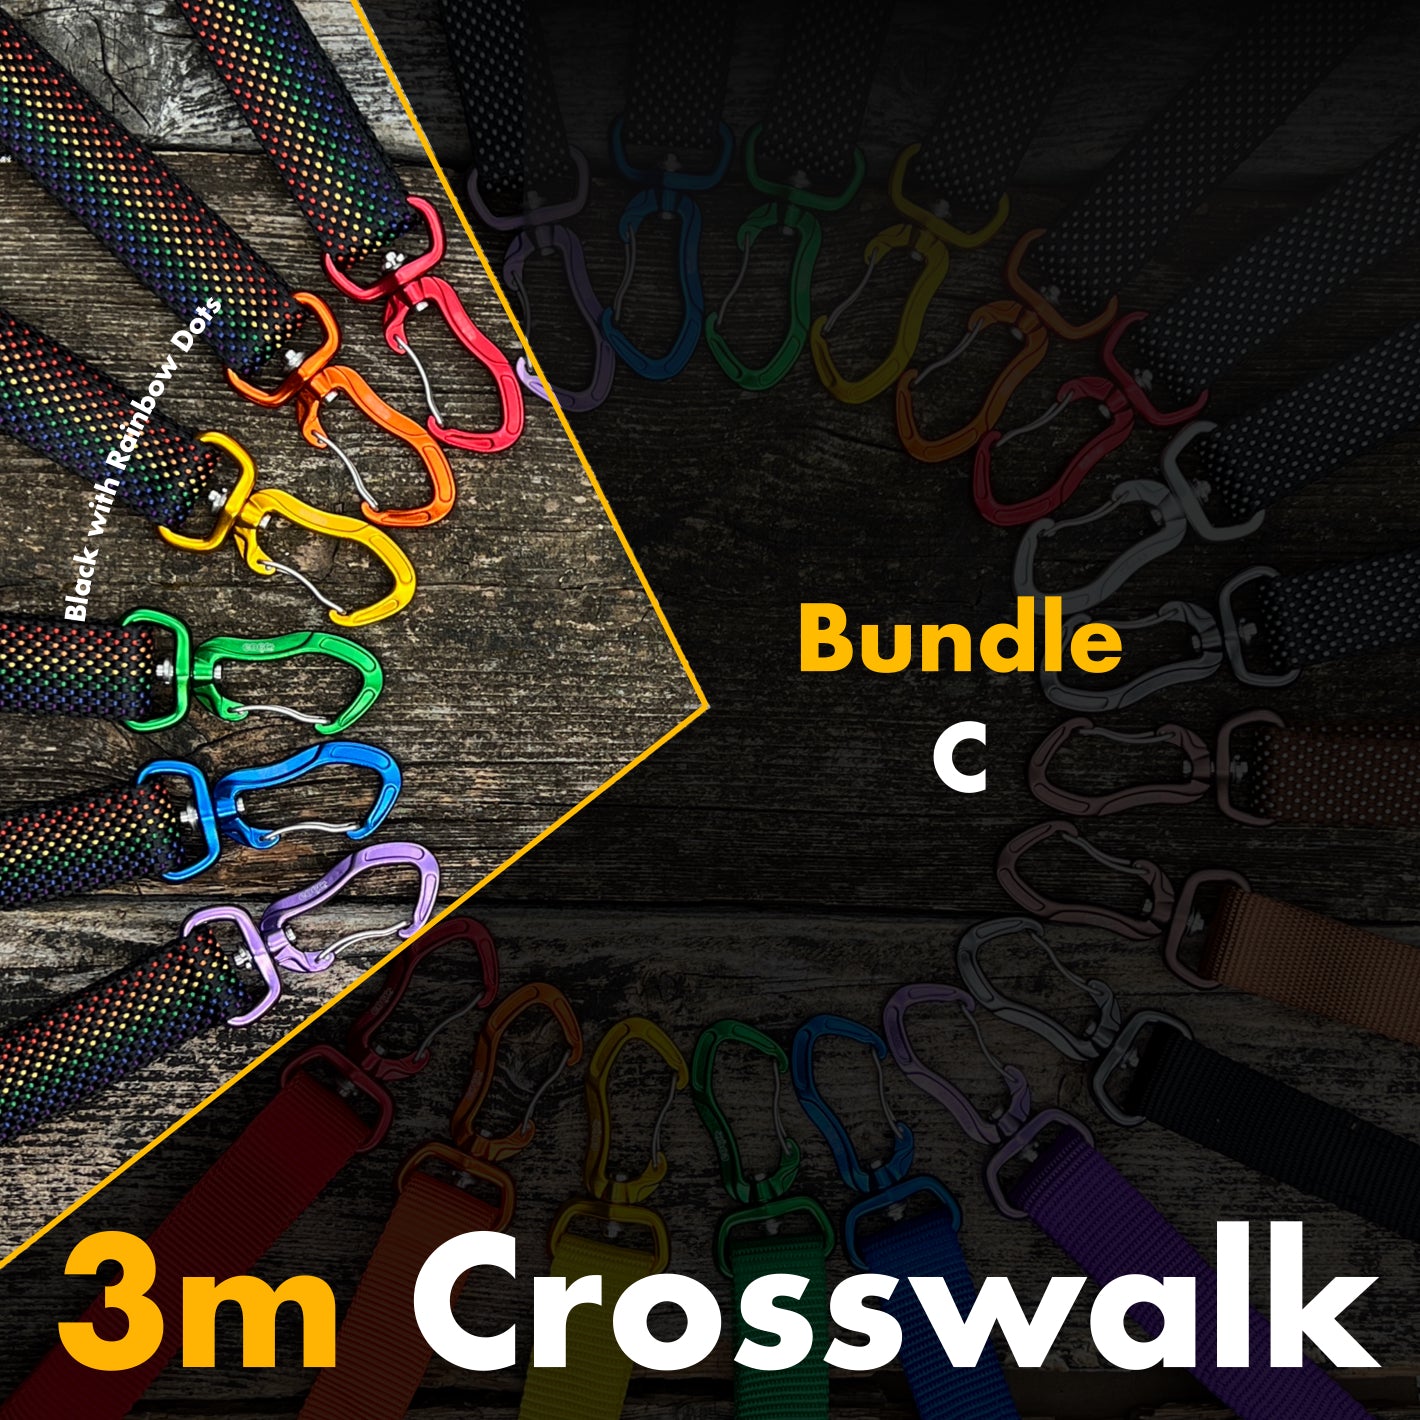 3m Crosswalk - Bundle C - Black with Rainbow Dots